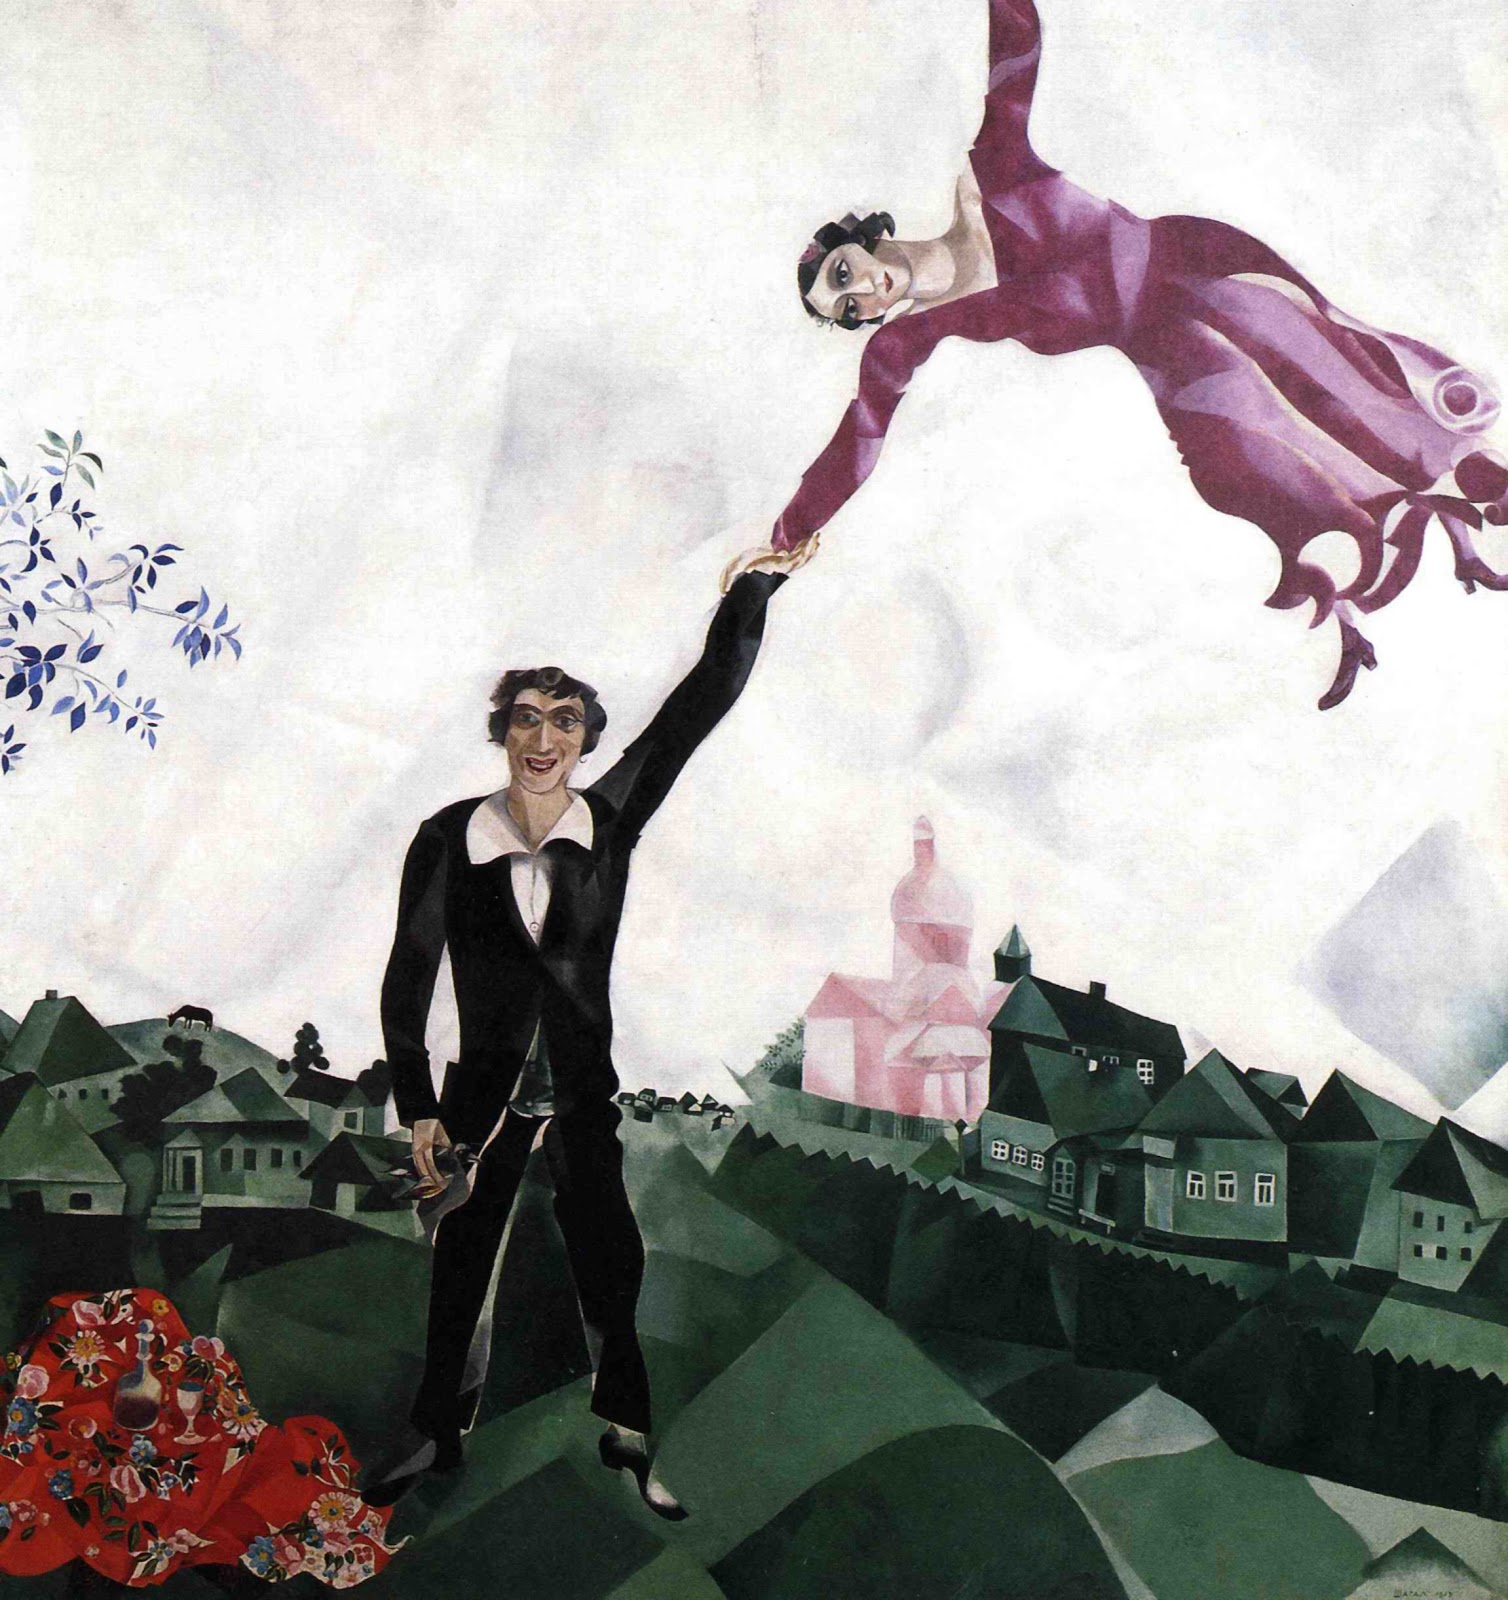 Marc+Chagall-1887-1985 (249).jpg